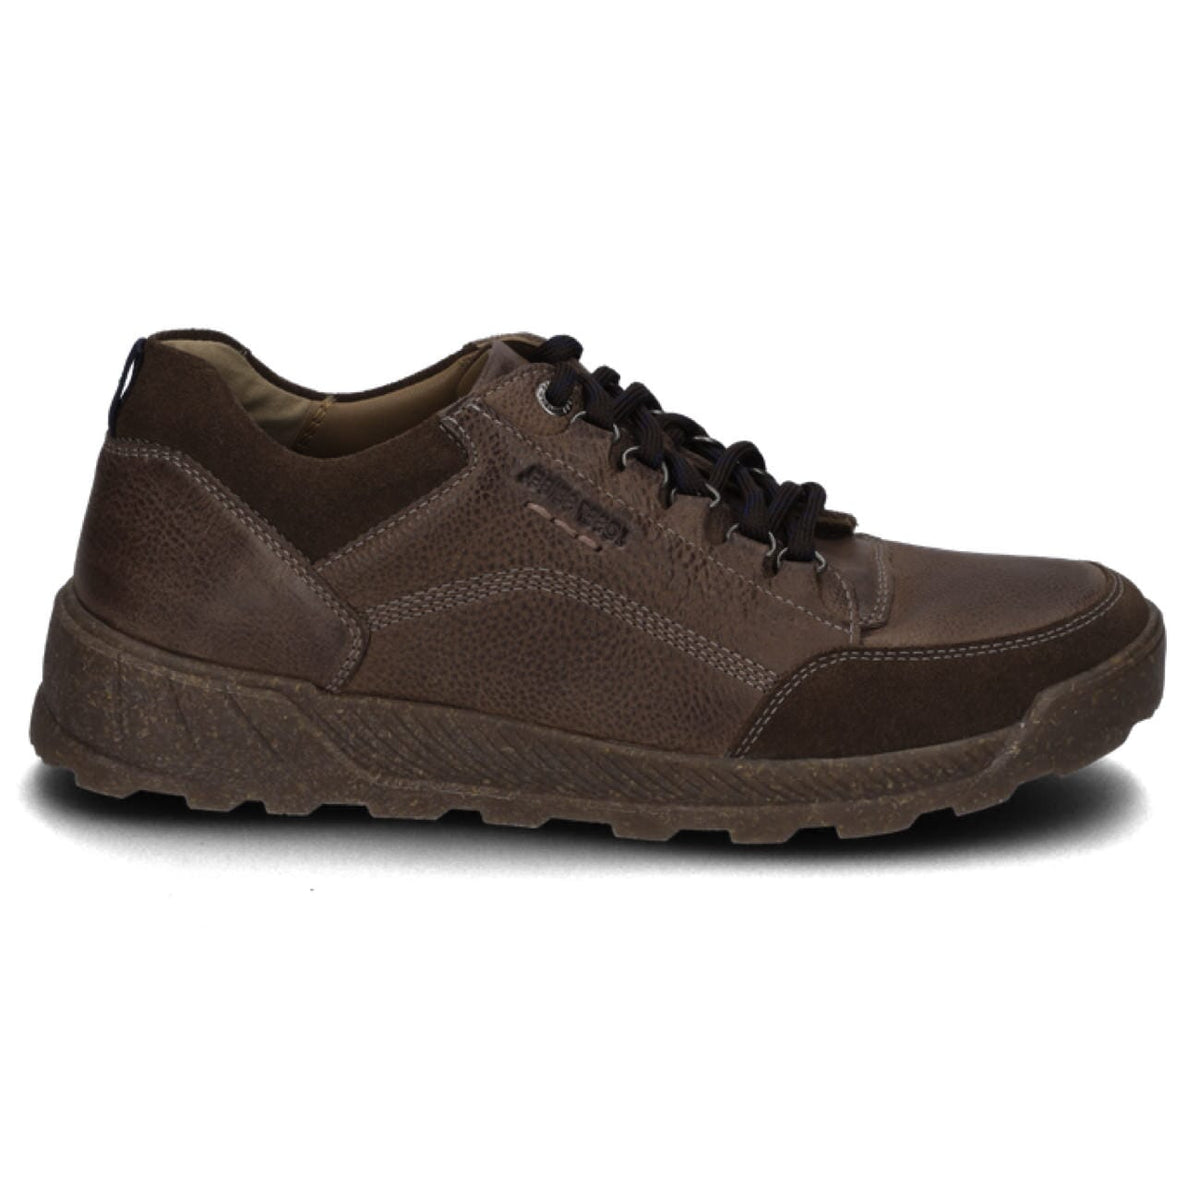 Josef Seibel, Raymond 01, Shoes, Leather, Braun Shoes Josef Seibel 